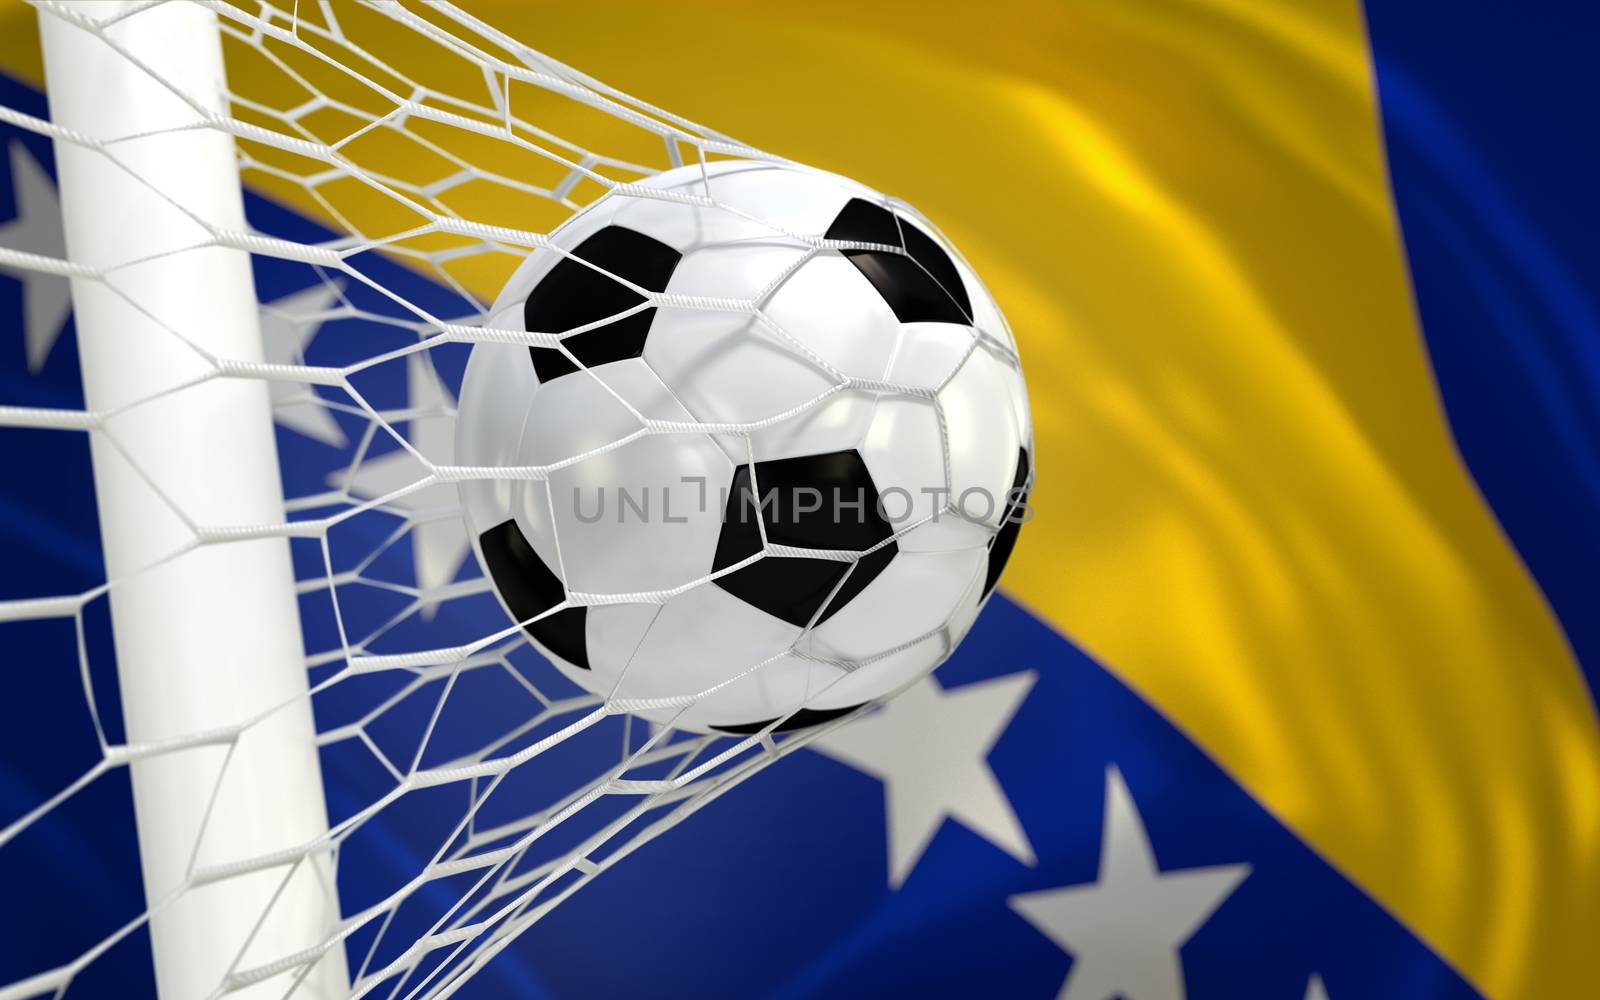  Bosnia and Herzegovina waving flag and soccer ball in goal net by Barbraford